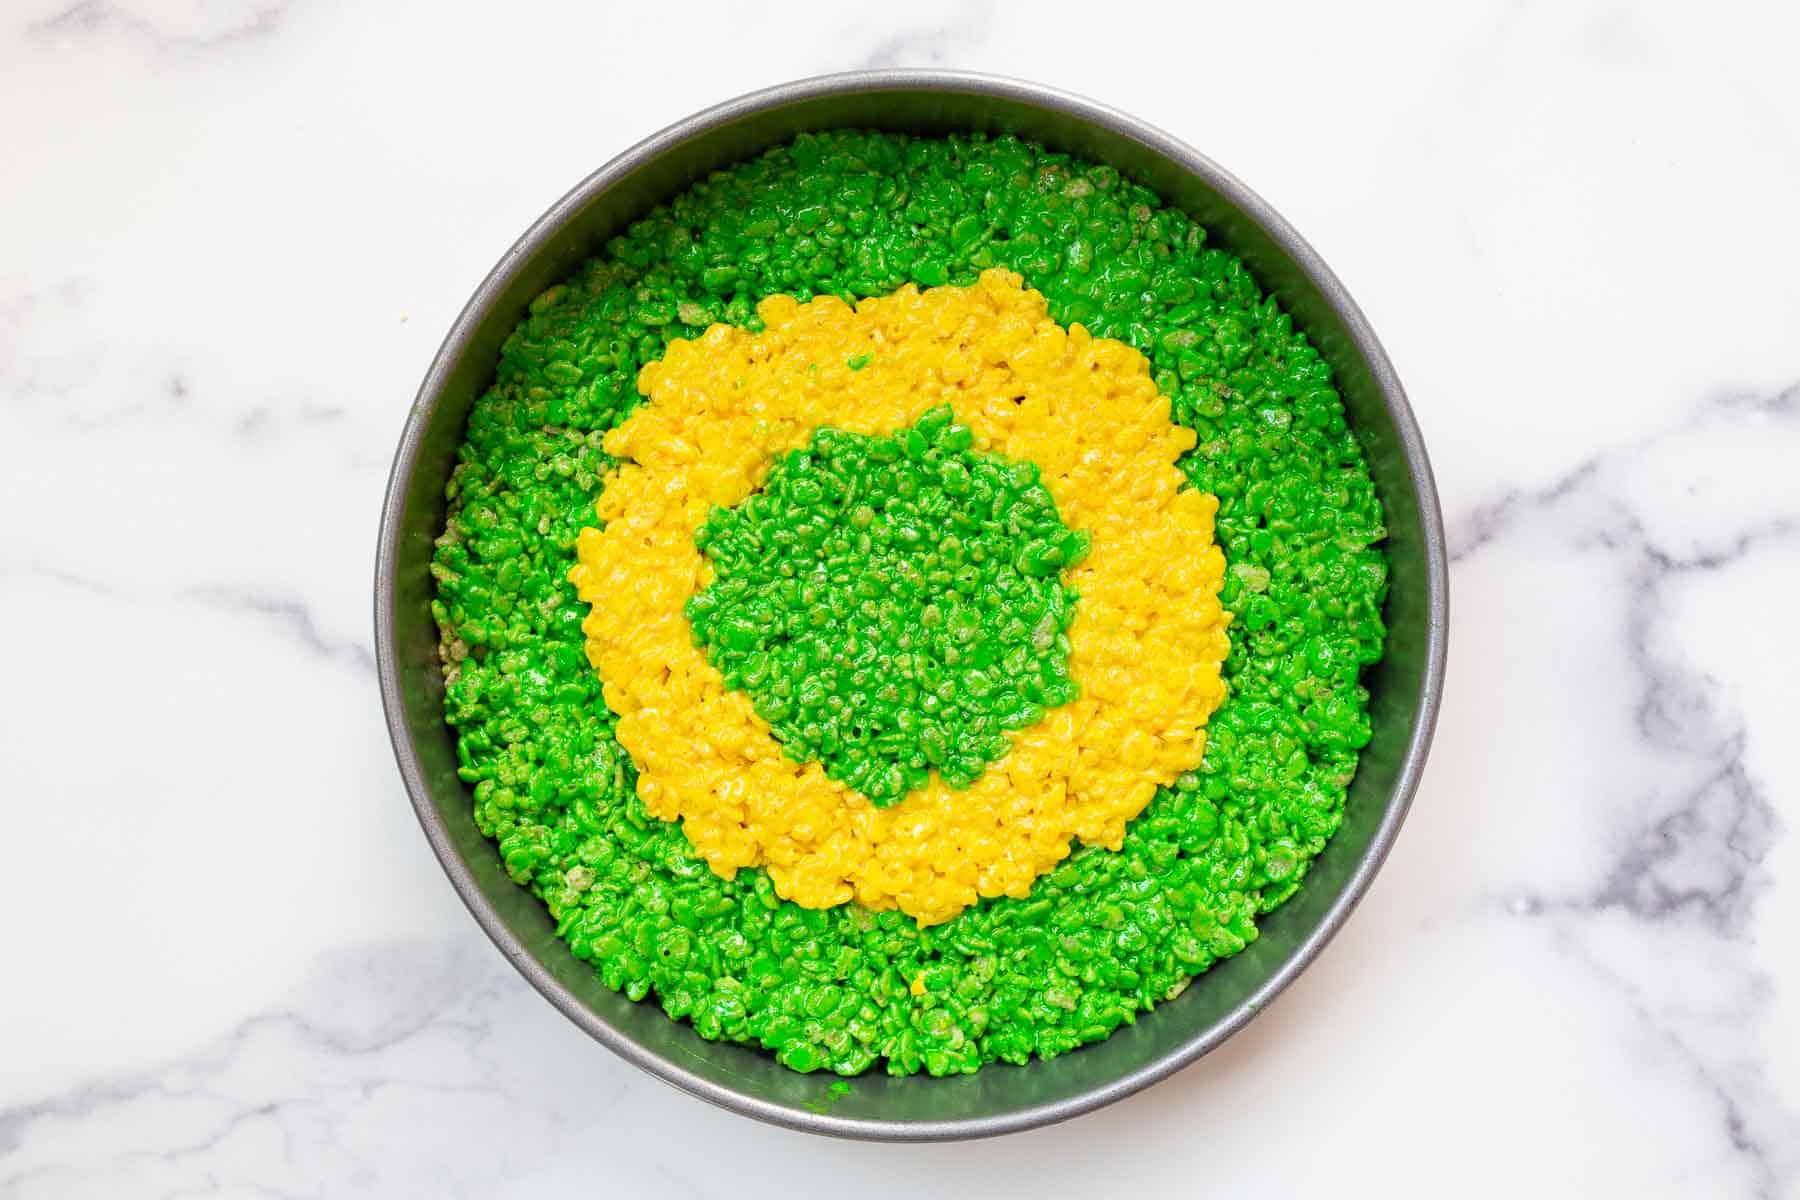 Green and yellow bullseye design in a round cake pan.